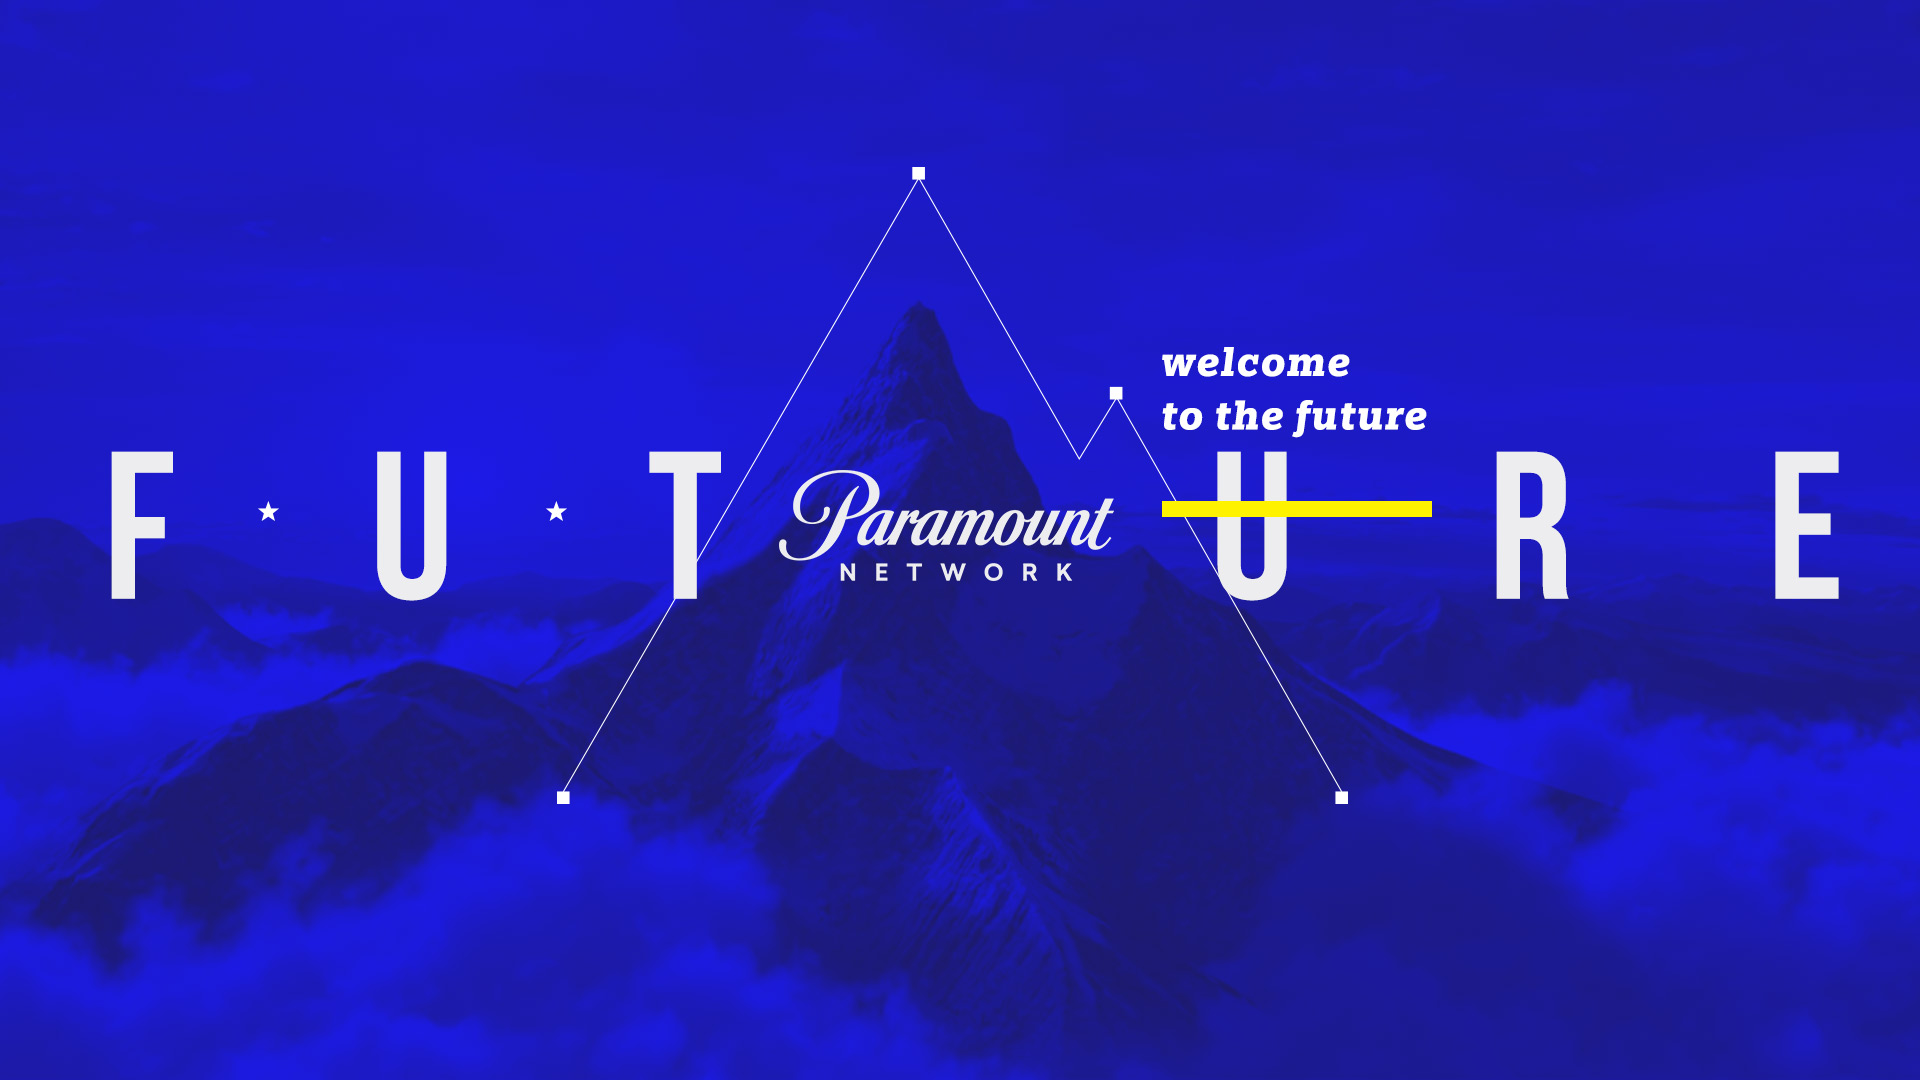 Paramount brand toolkit design